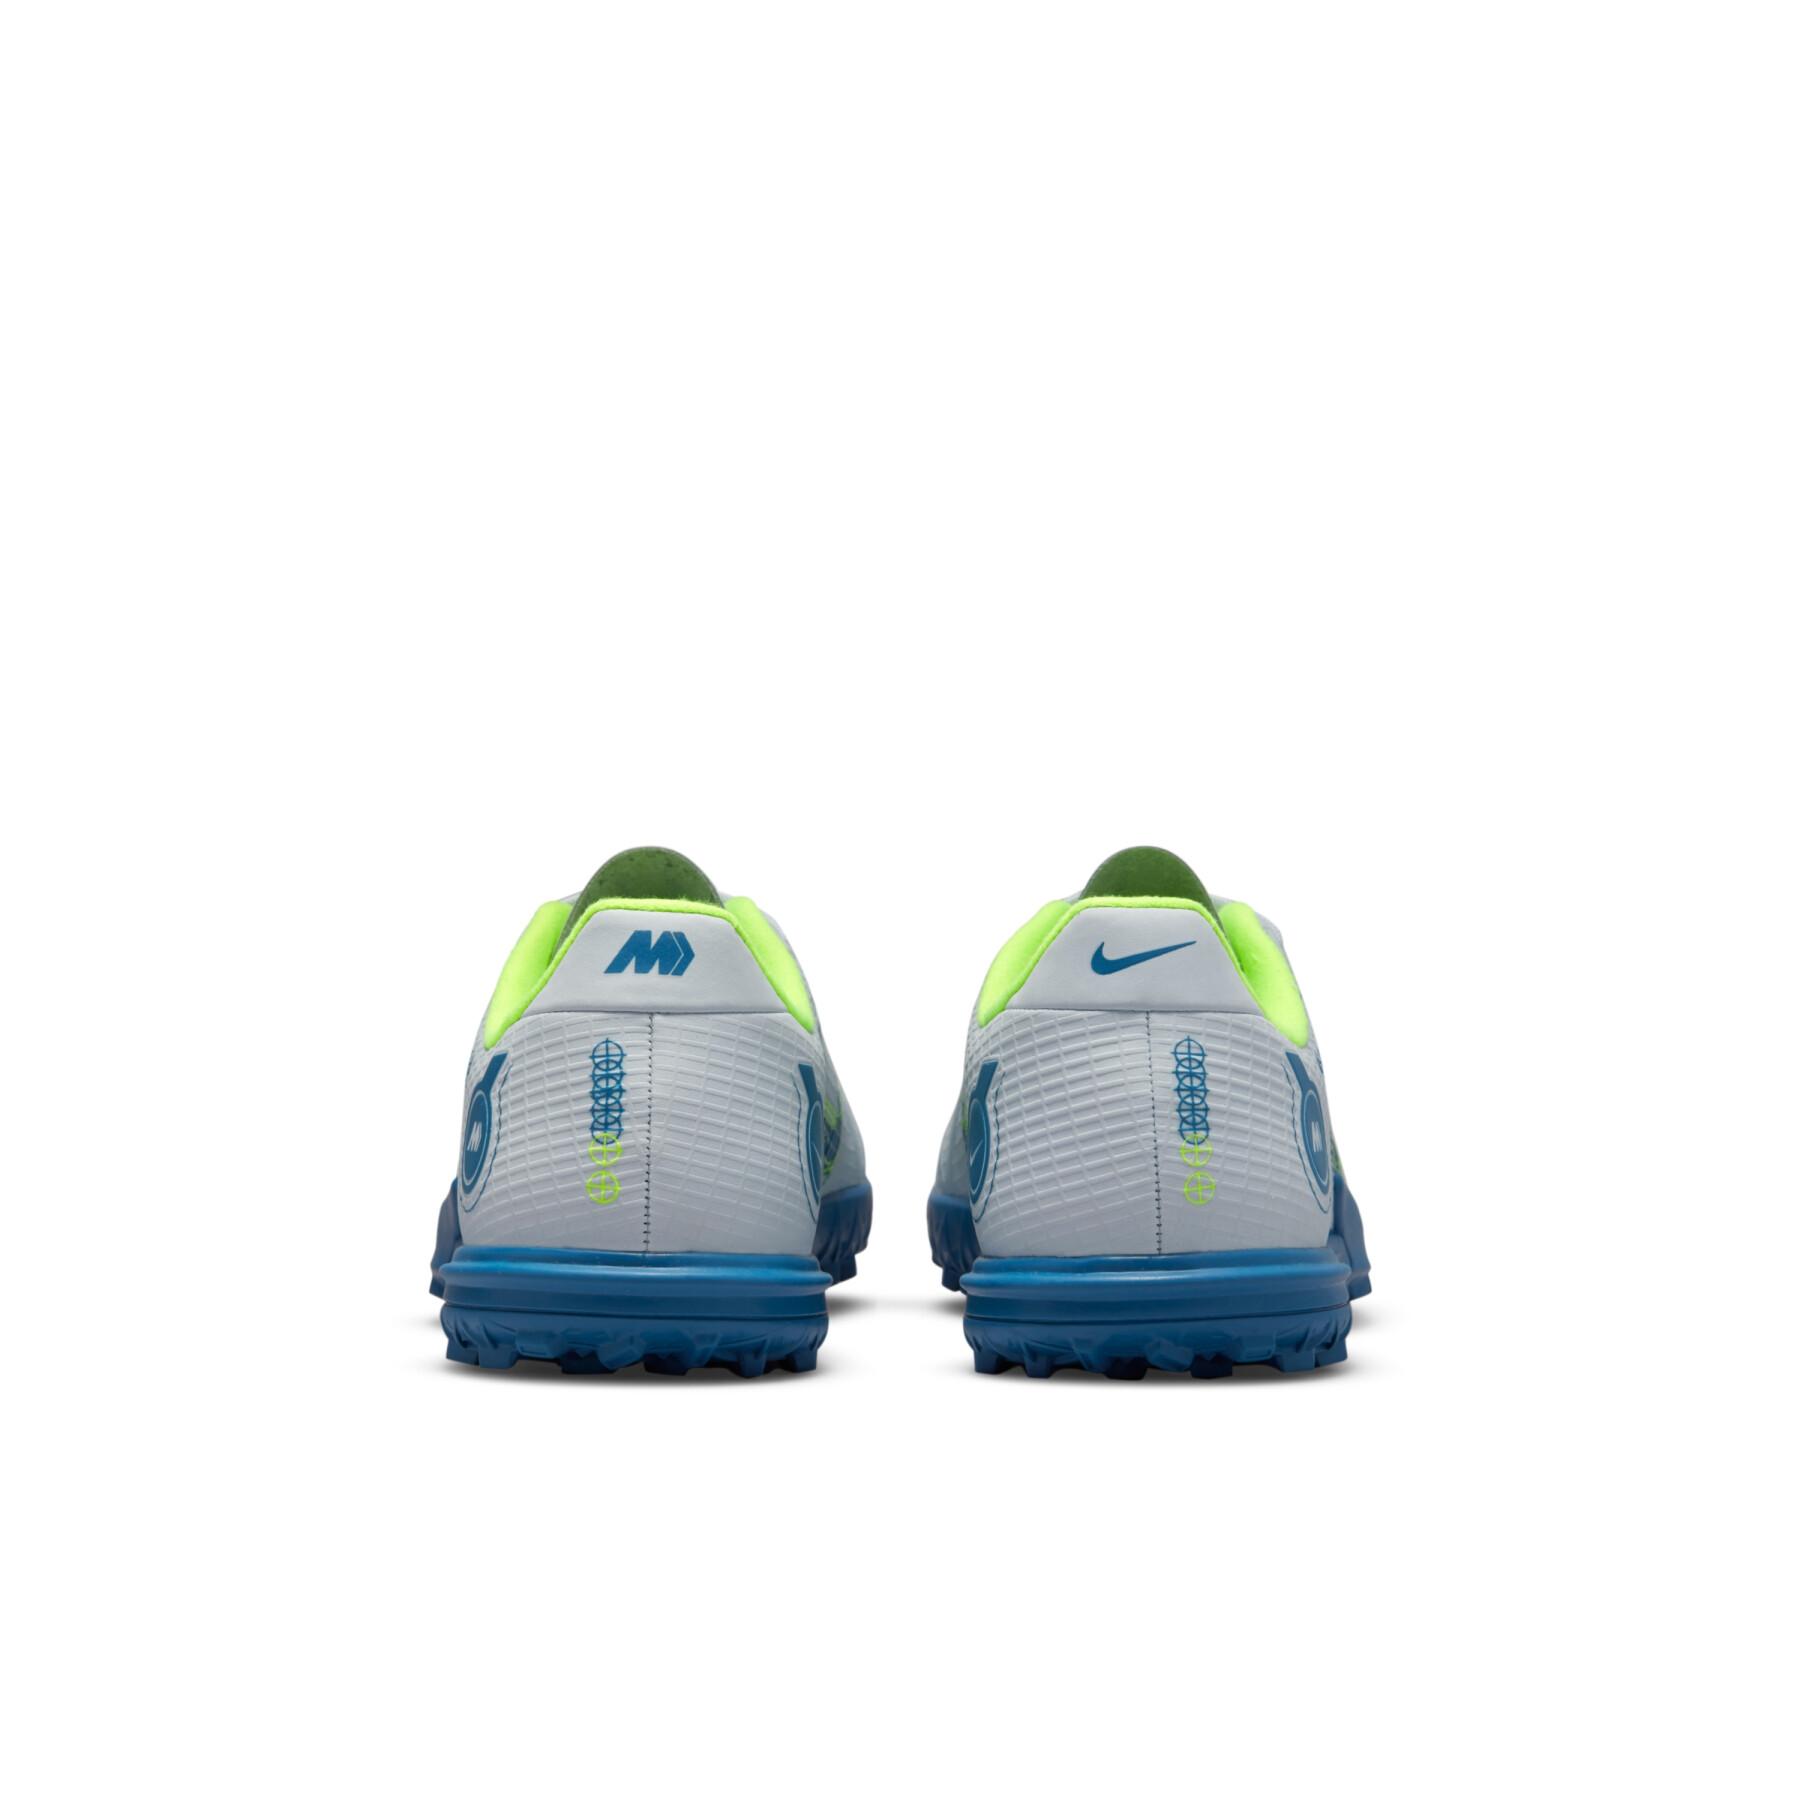 Children's soccer shoes Nike Mercurial Vapor 14 Academy - Progress Pack